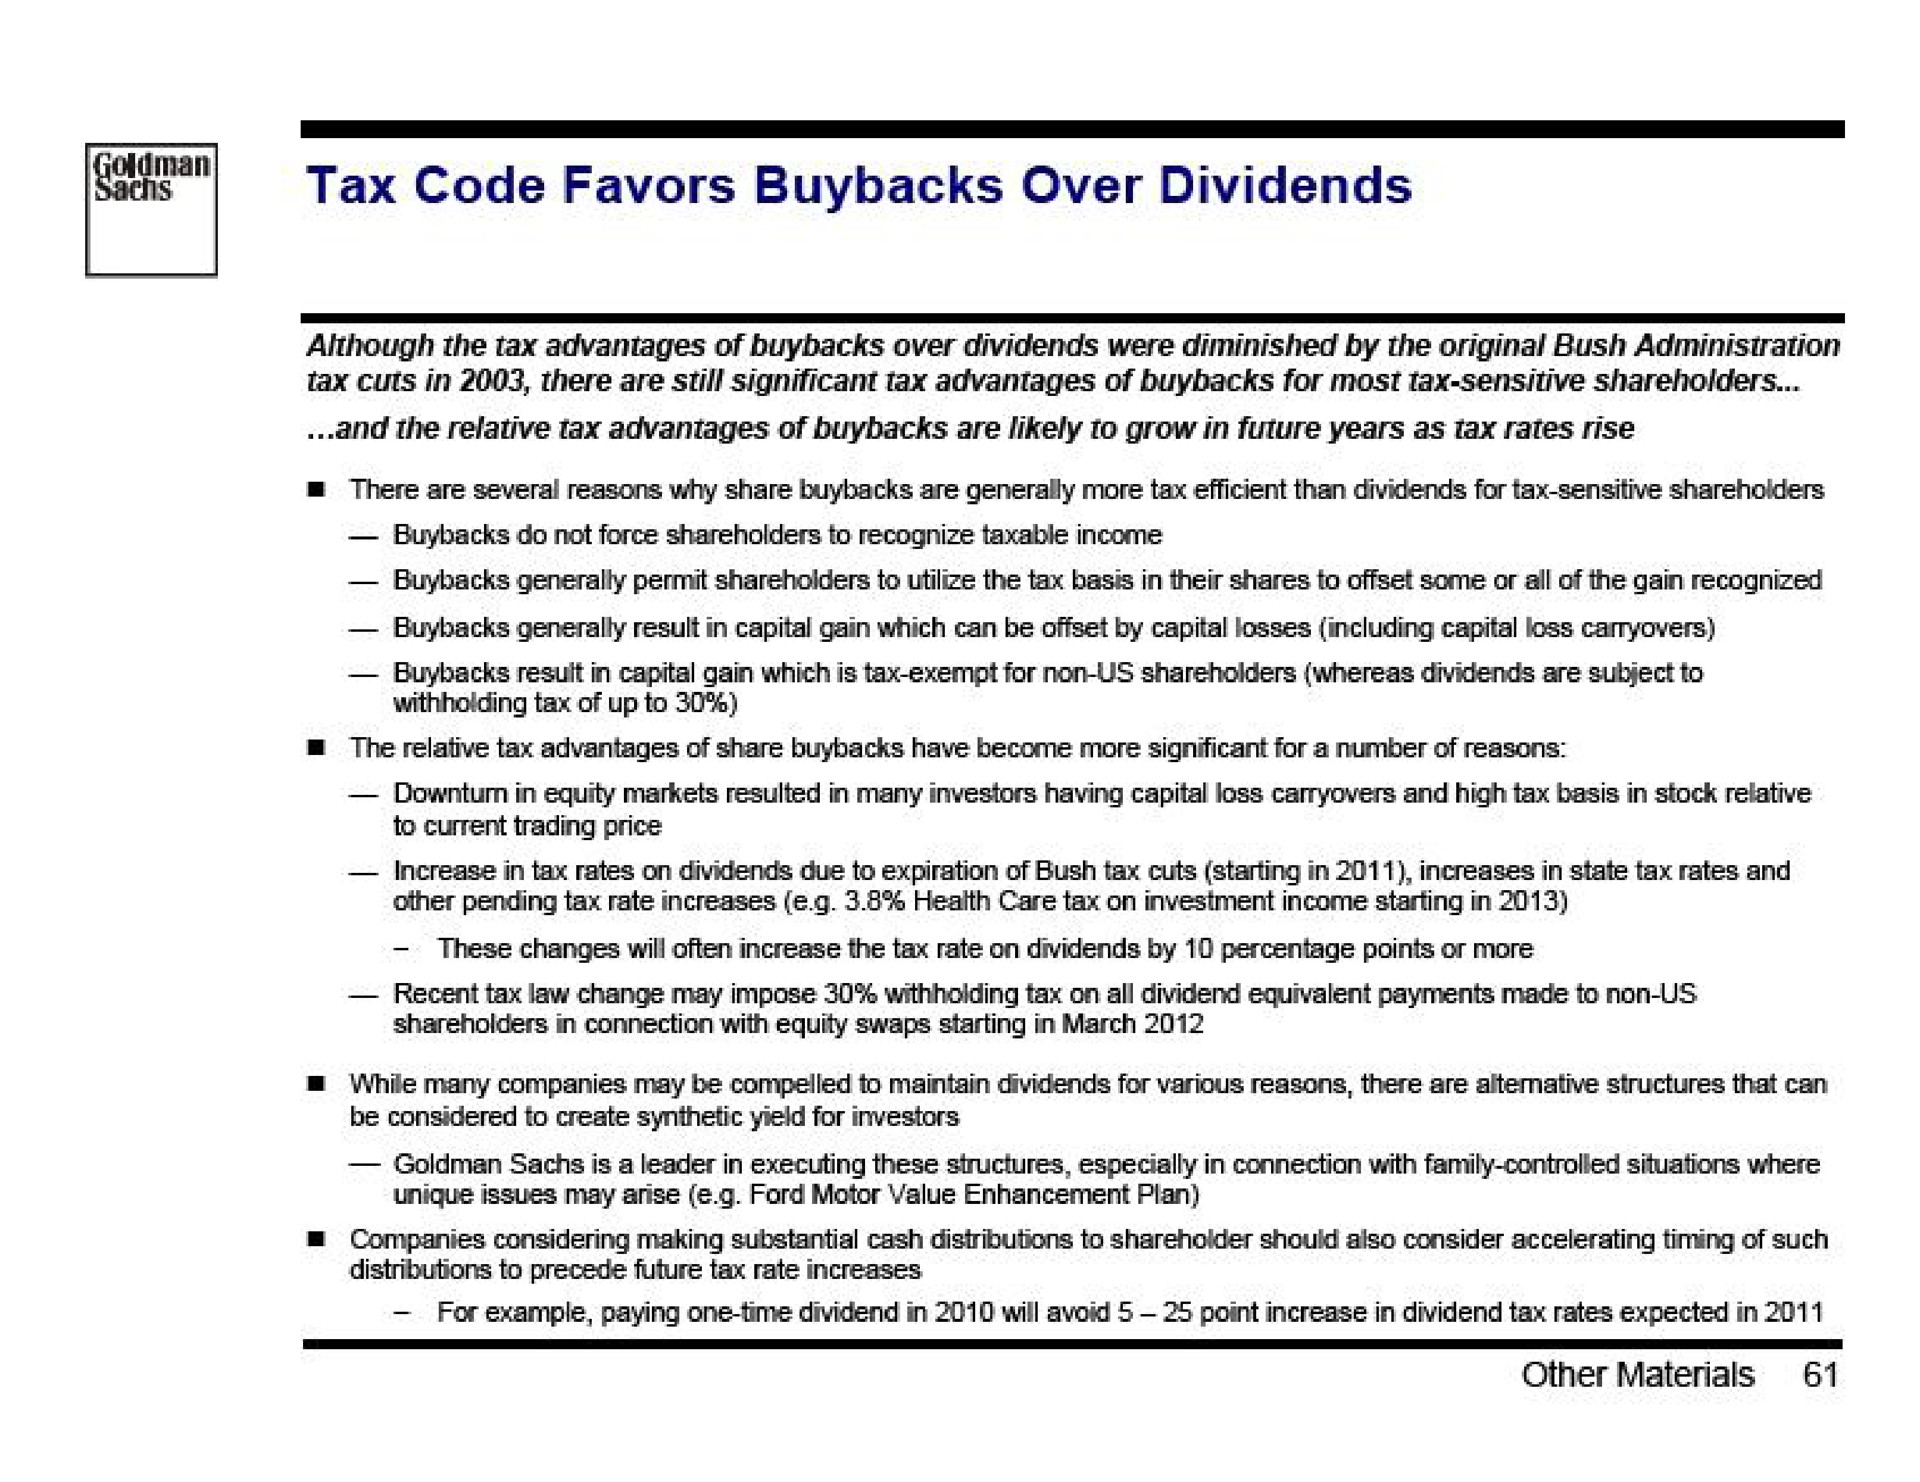 tax code favors over dividends | Goldman Sachs